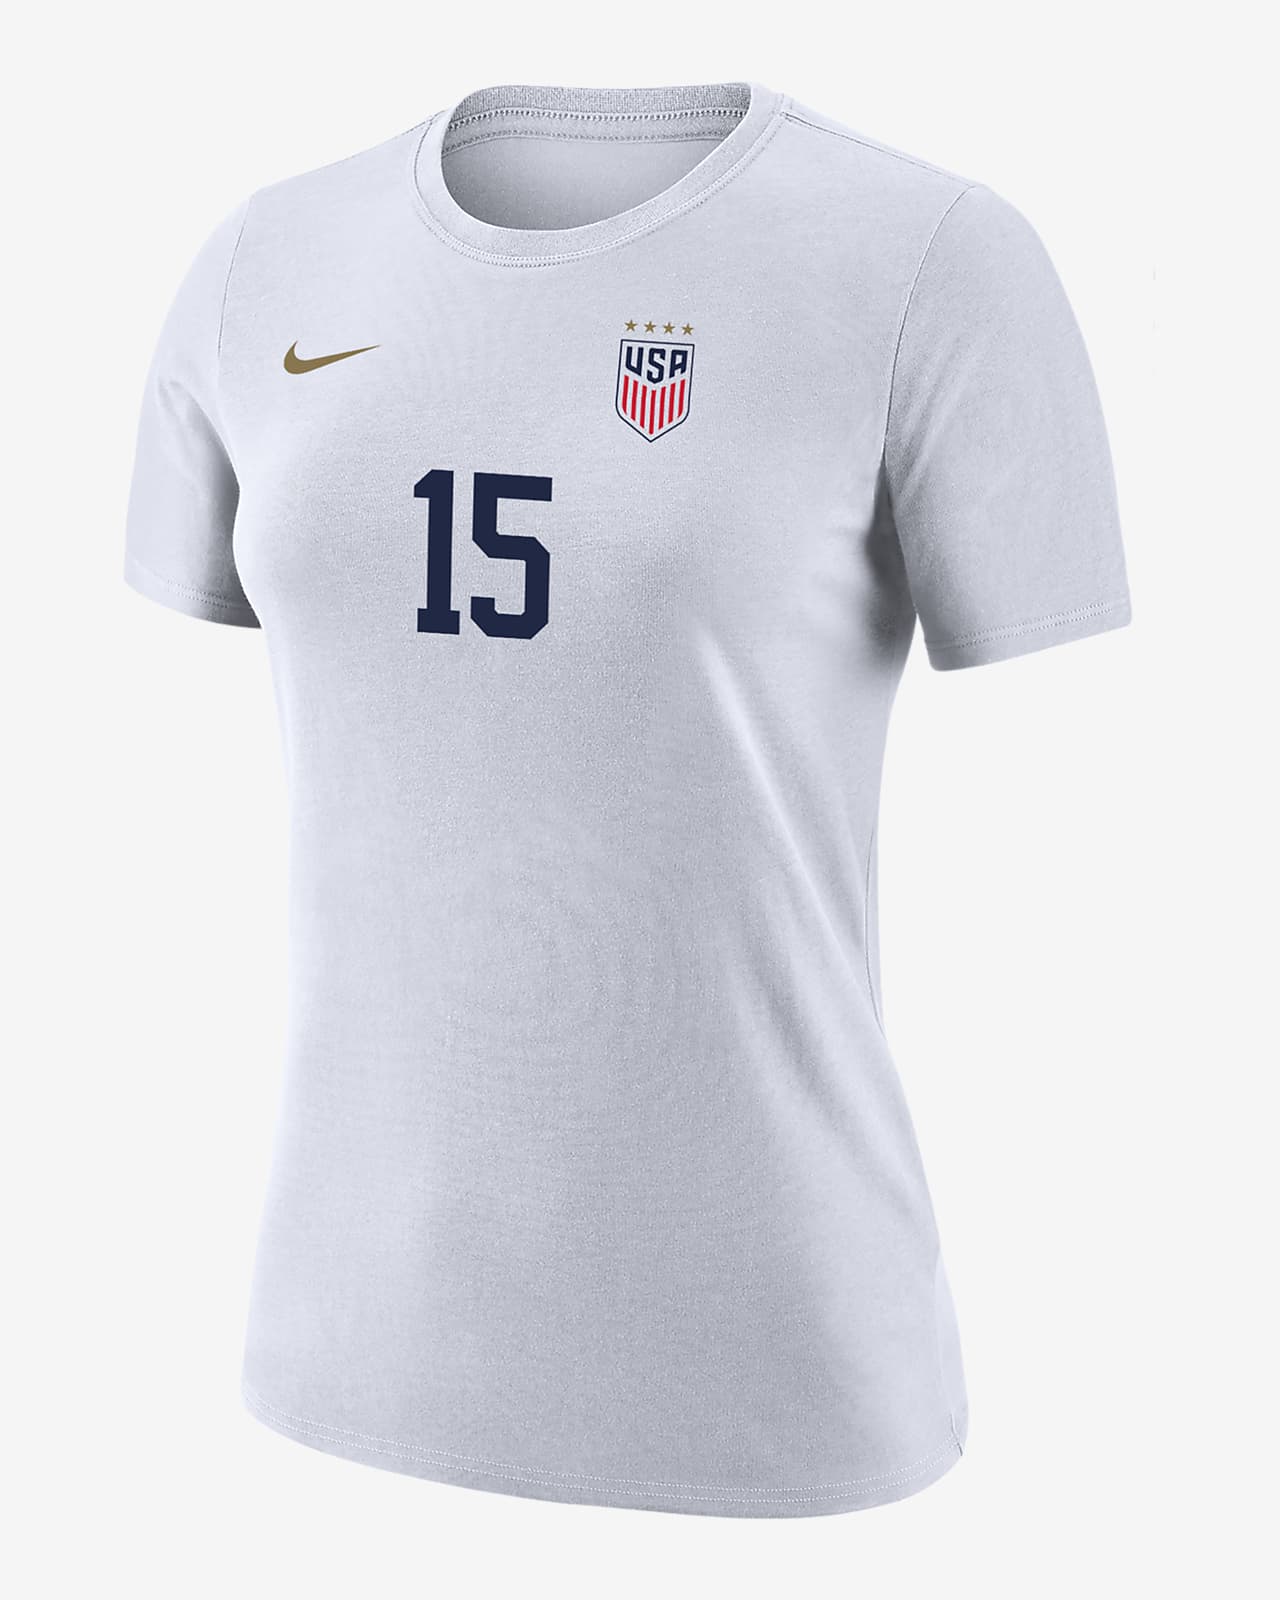 Megan Rapinoe USWNT Women's Nike Soccer T-Shirt